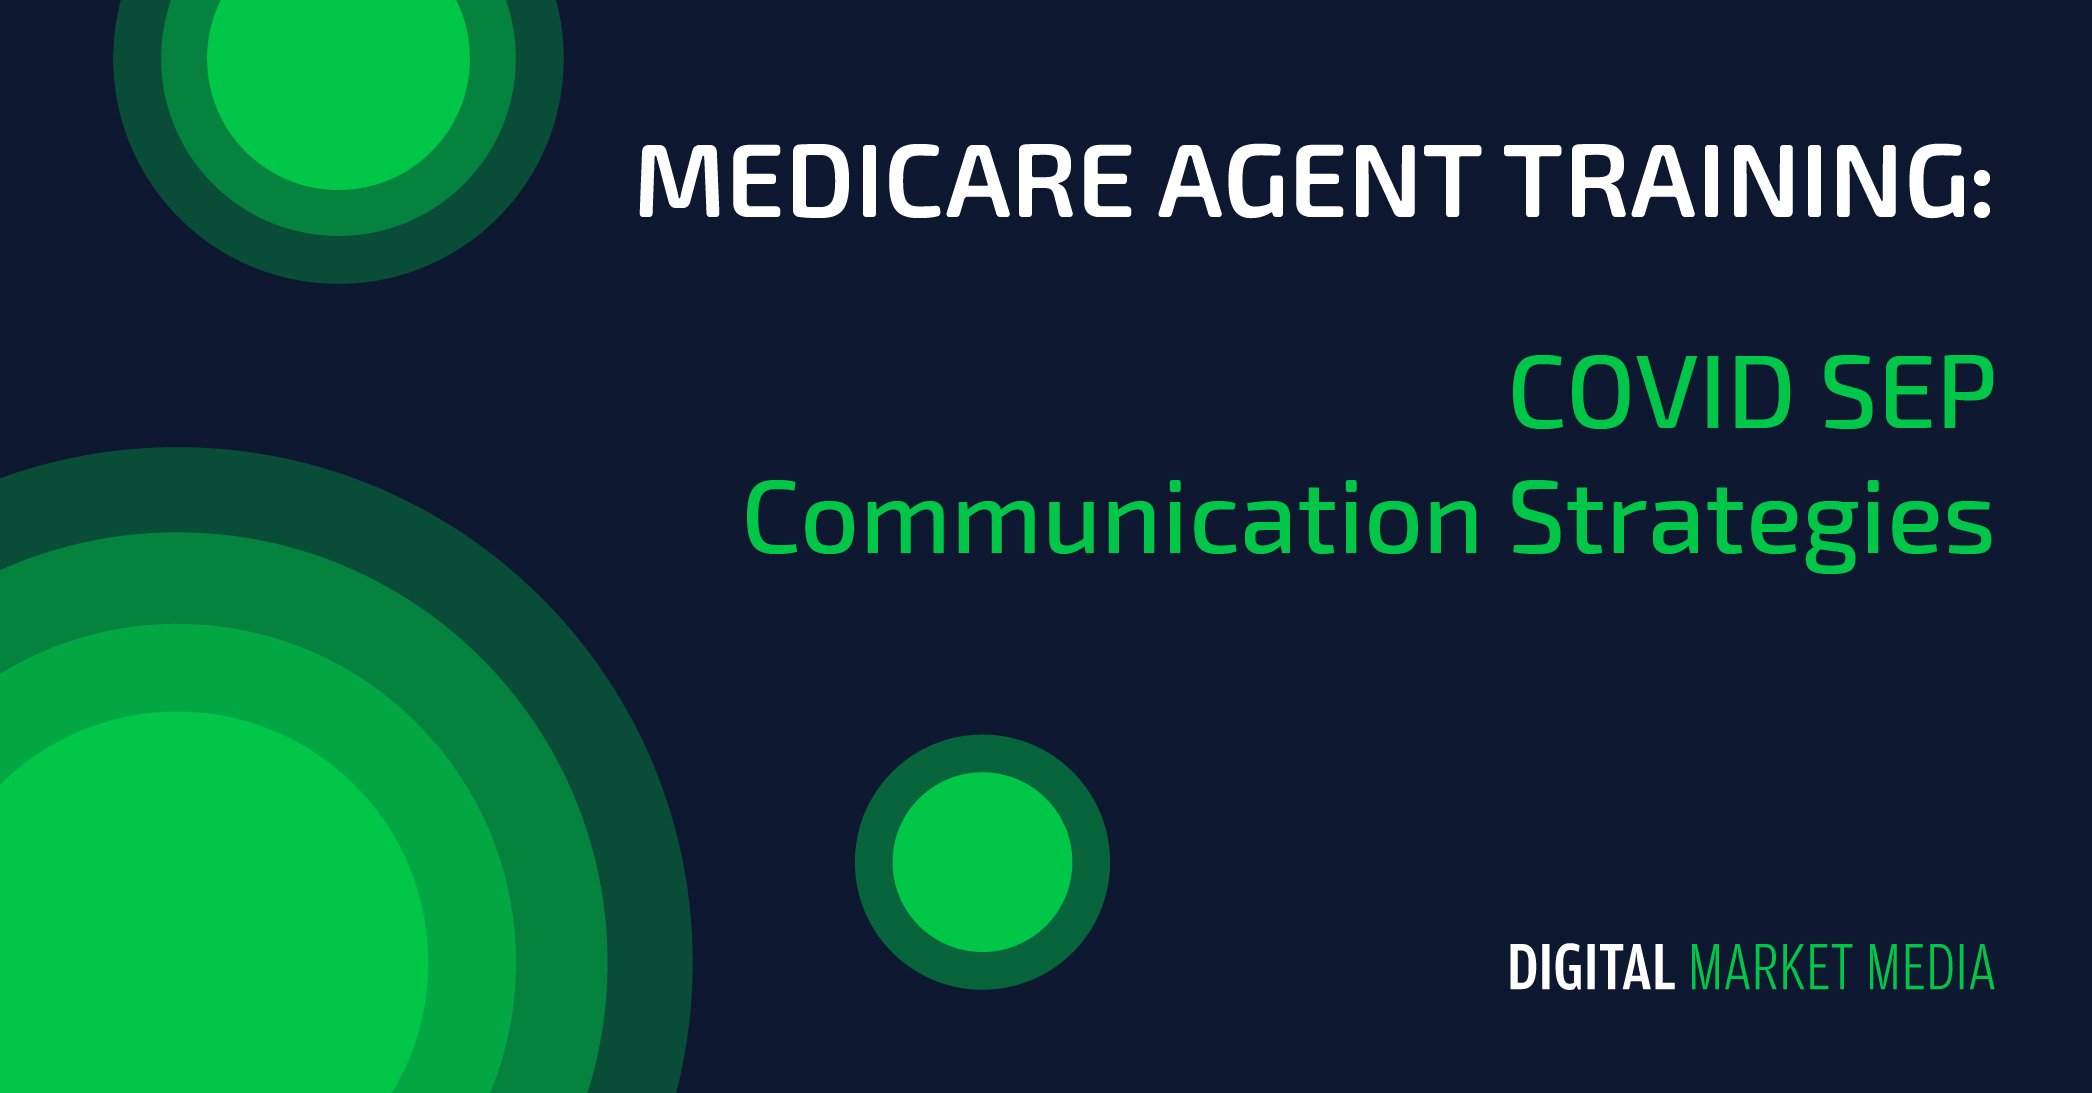 Medicare Agent Training: COVID SEP Communication Strategies